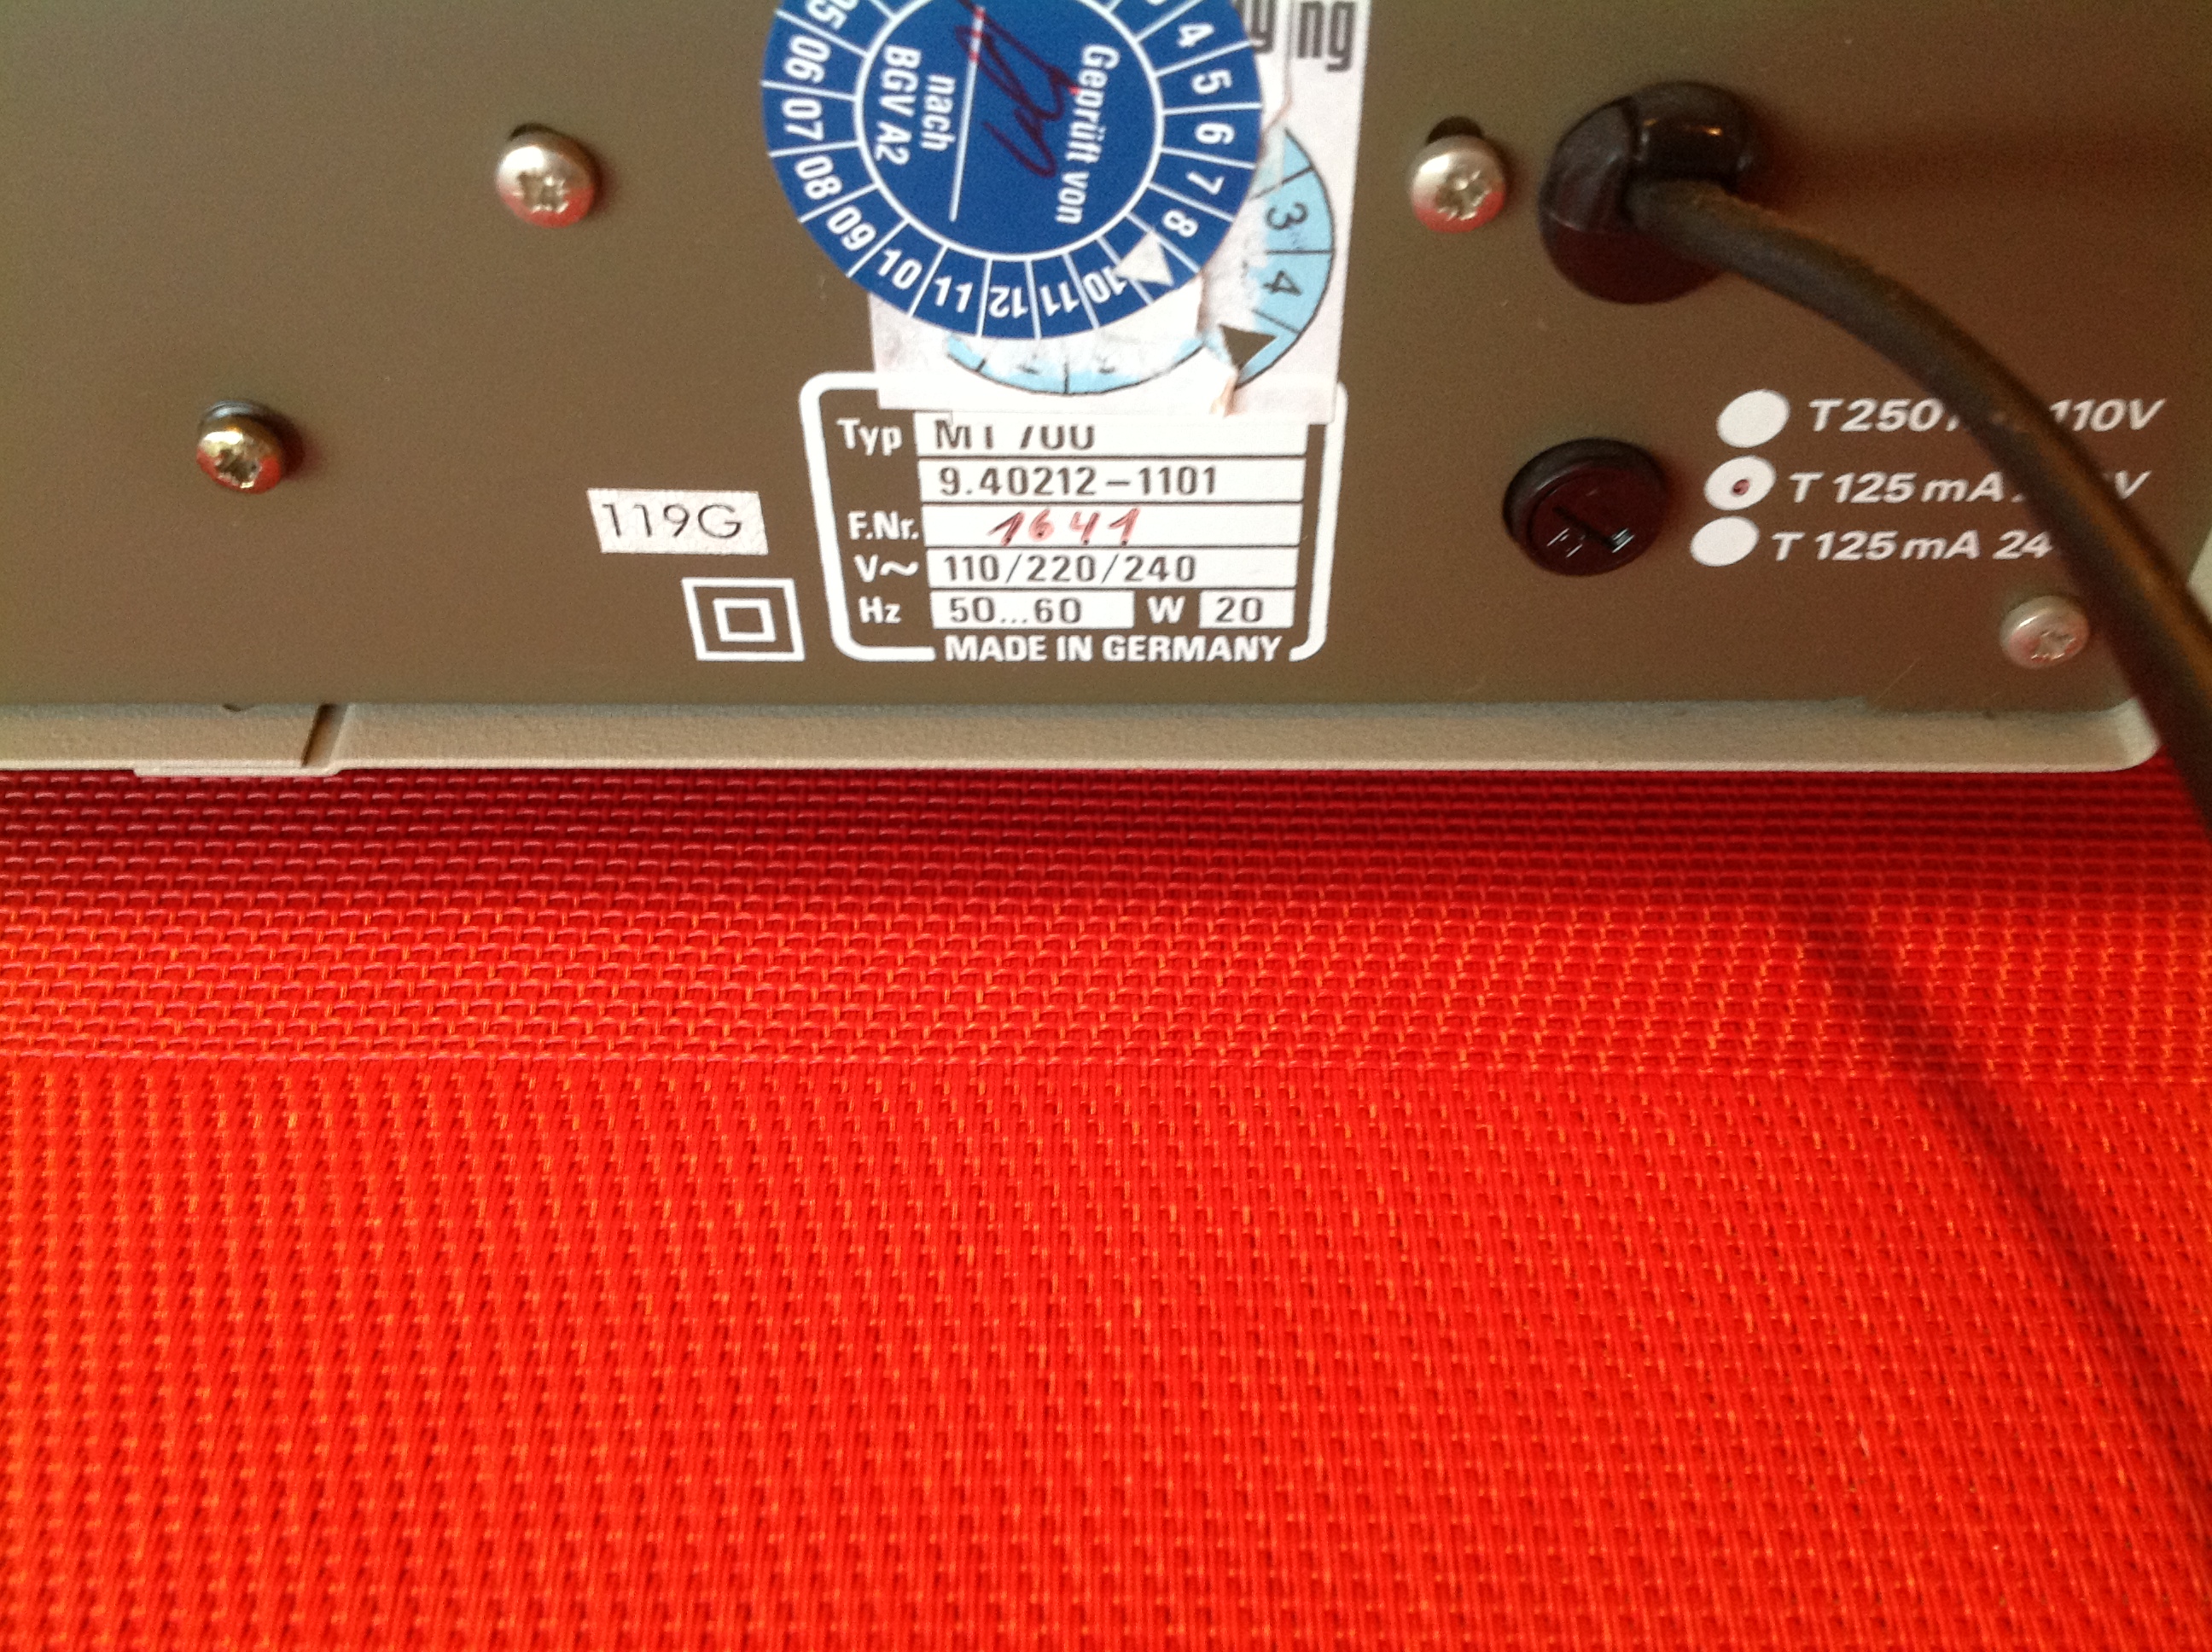 Grundig Monitor-Tester MT 700 - Farb-Balkengenerator